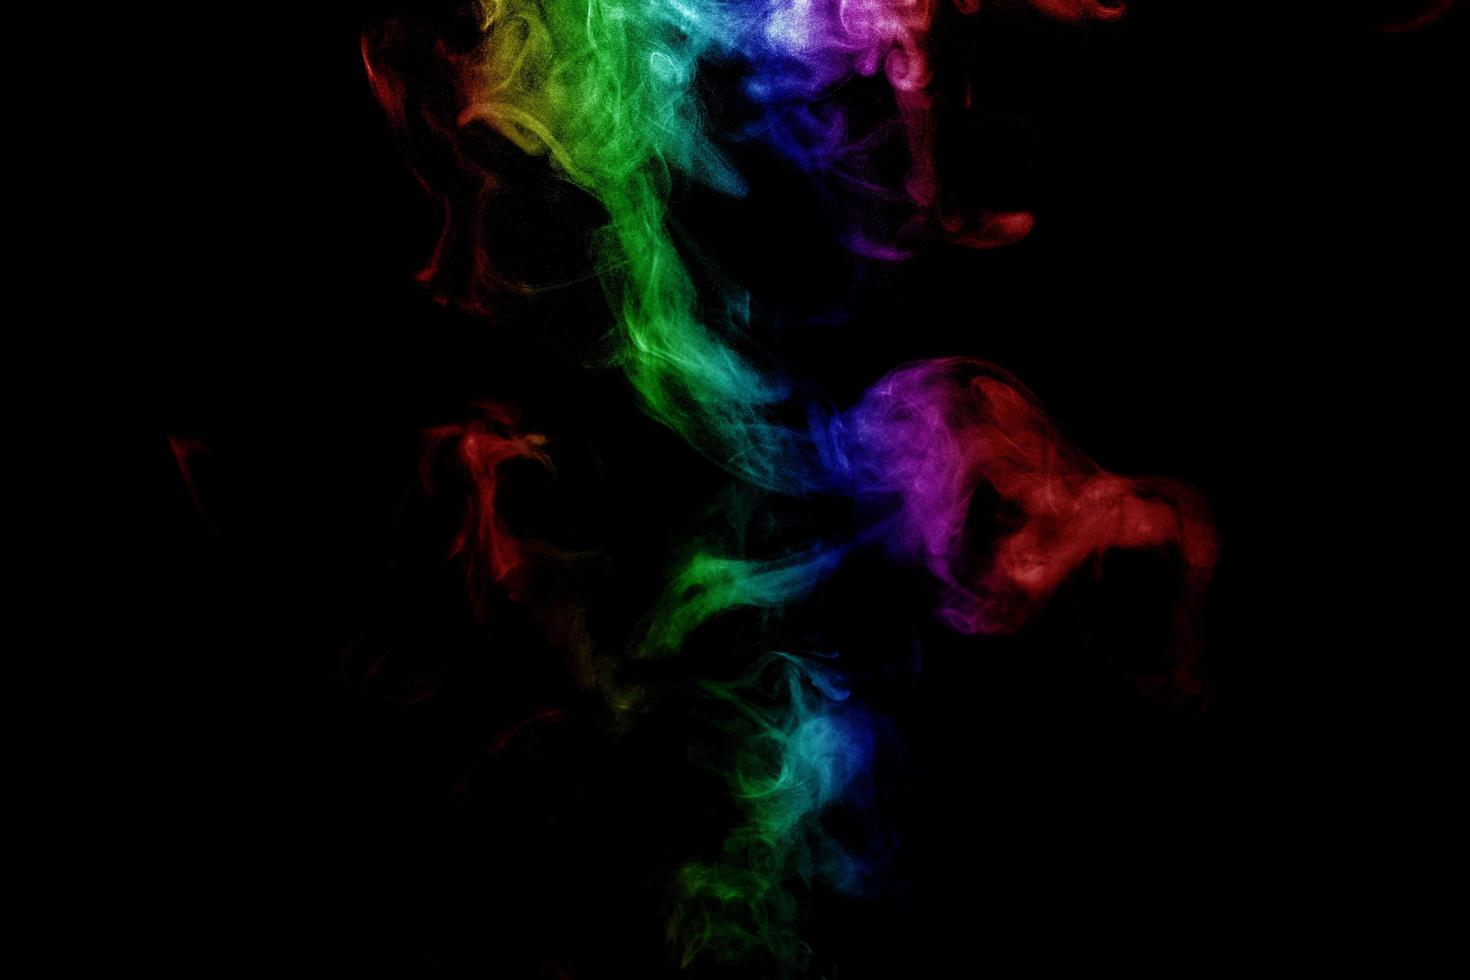 humo abstracto aislado sobre fondo negro, polvo de arco iris foto